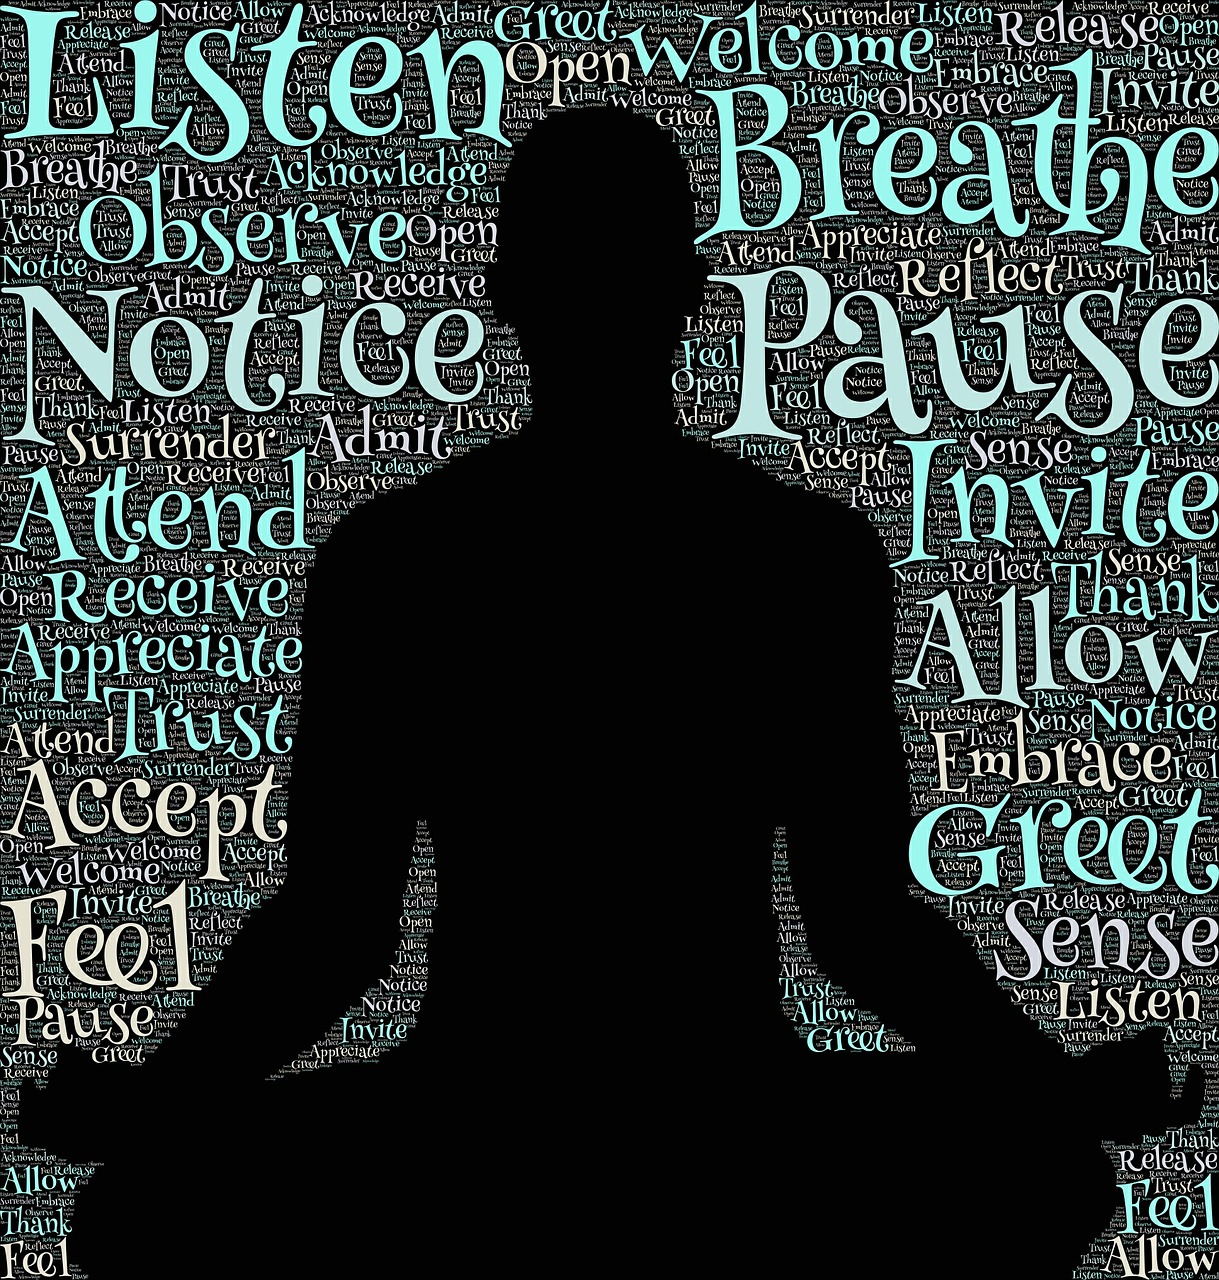 Are We Meditating Yet?